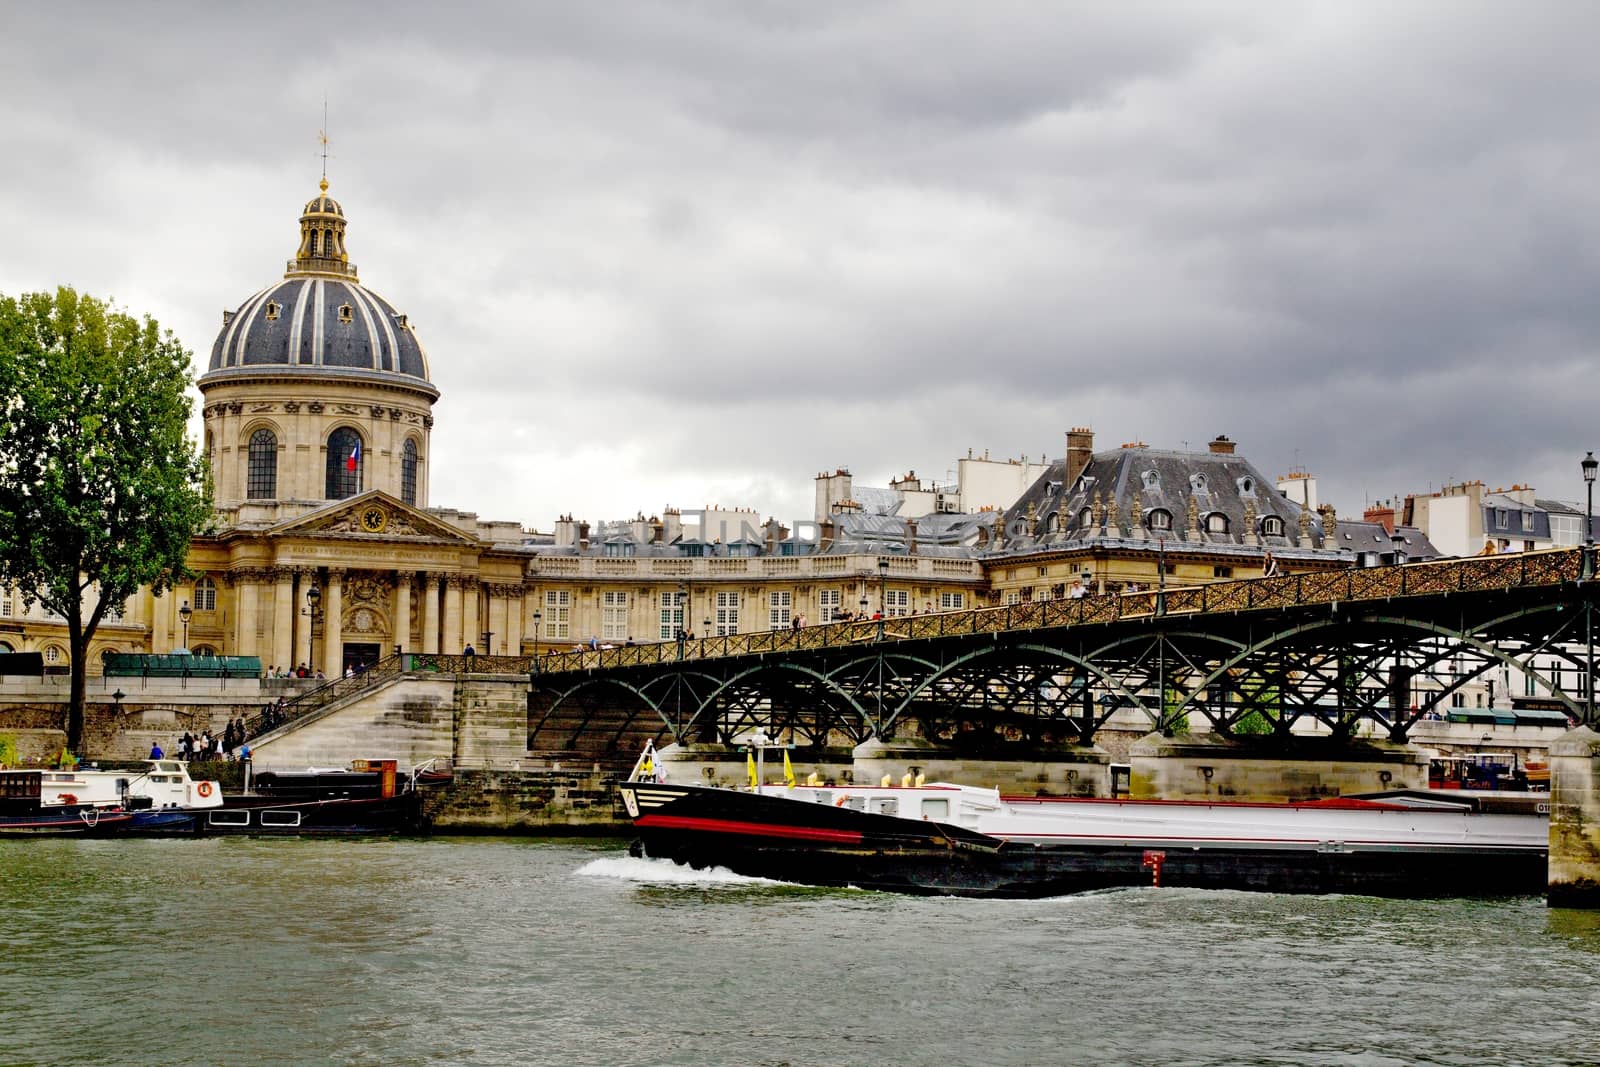 Parisian river view by Dermot68